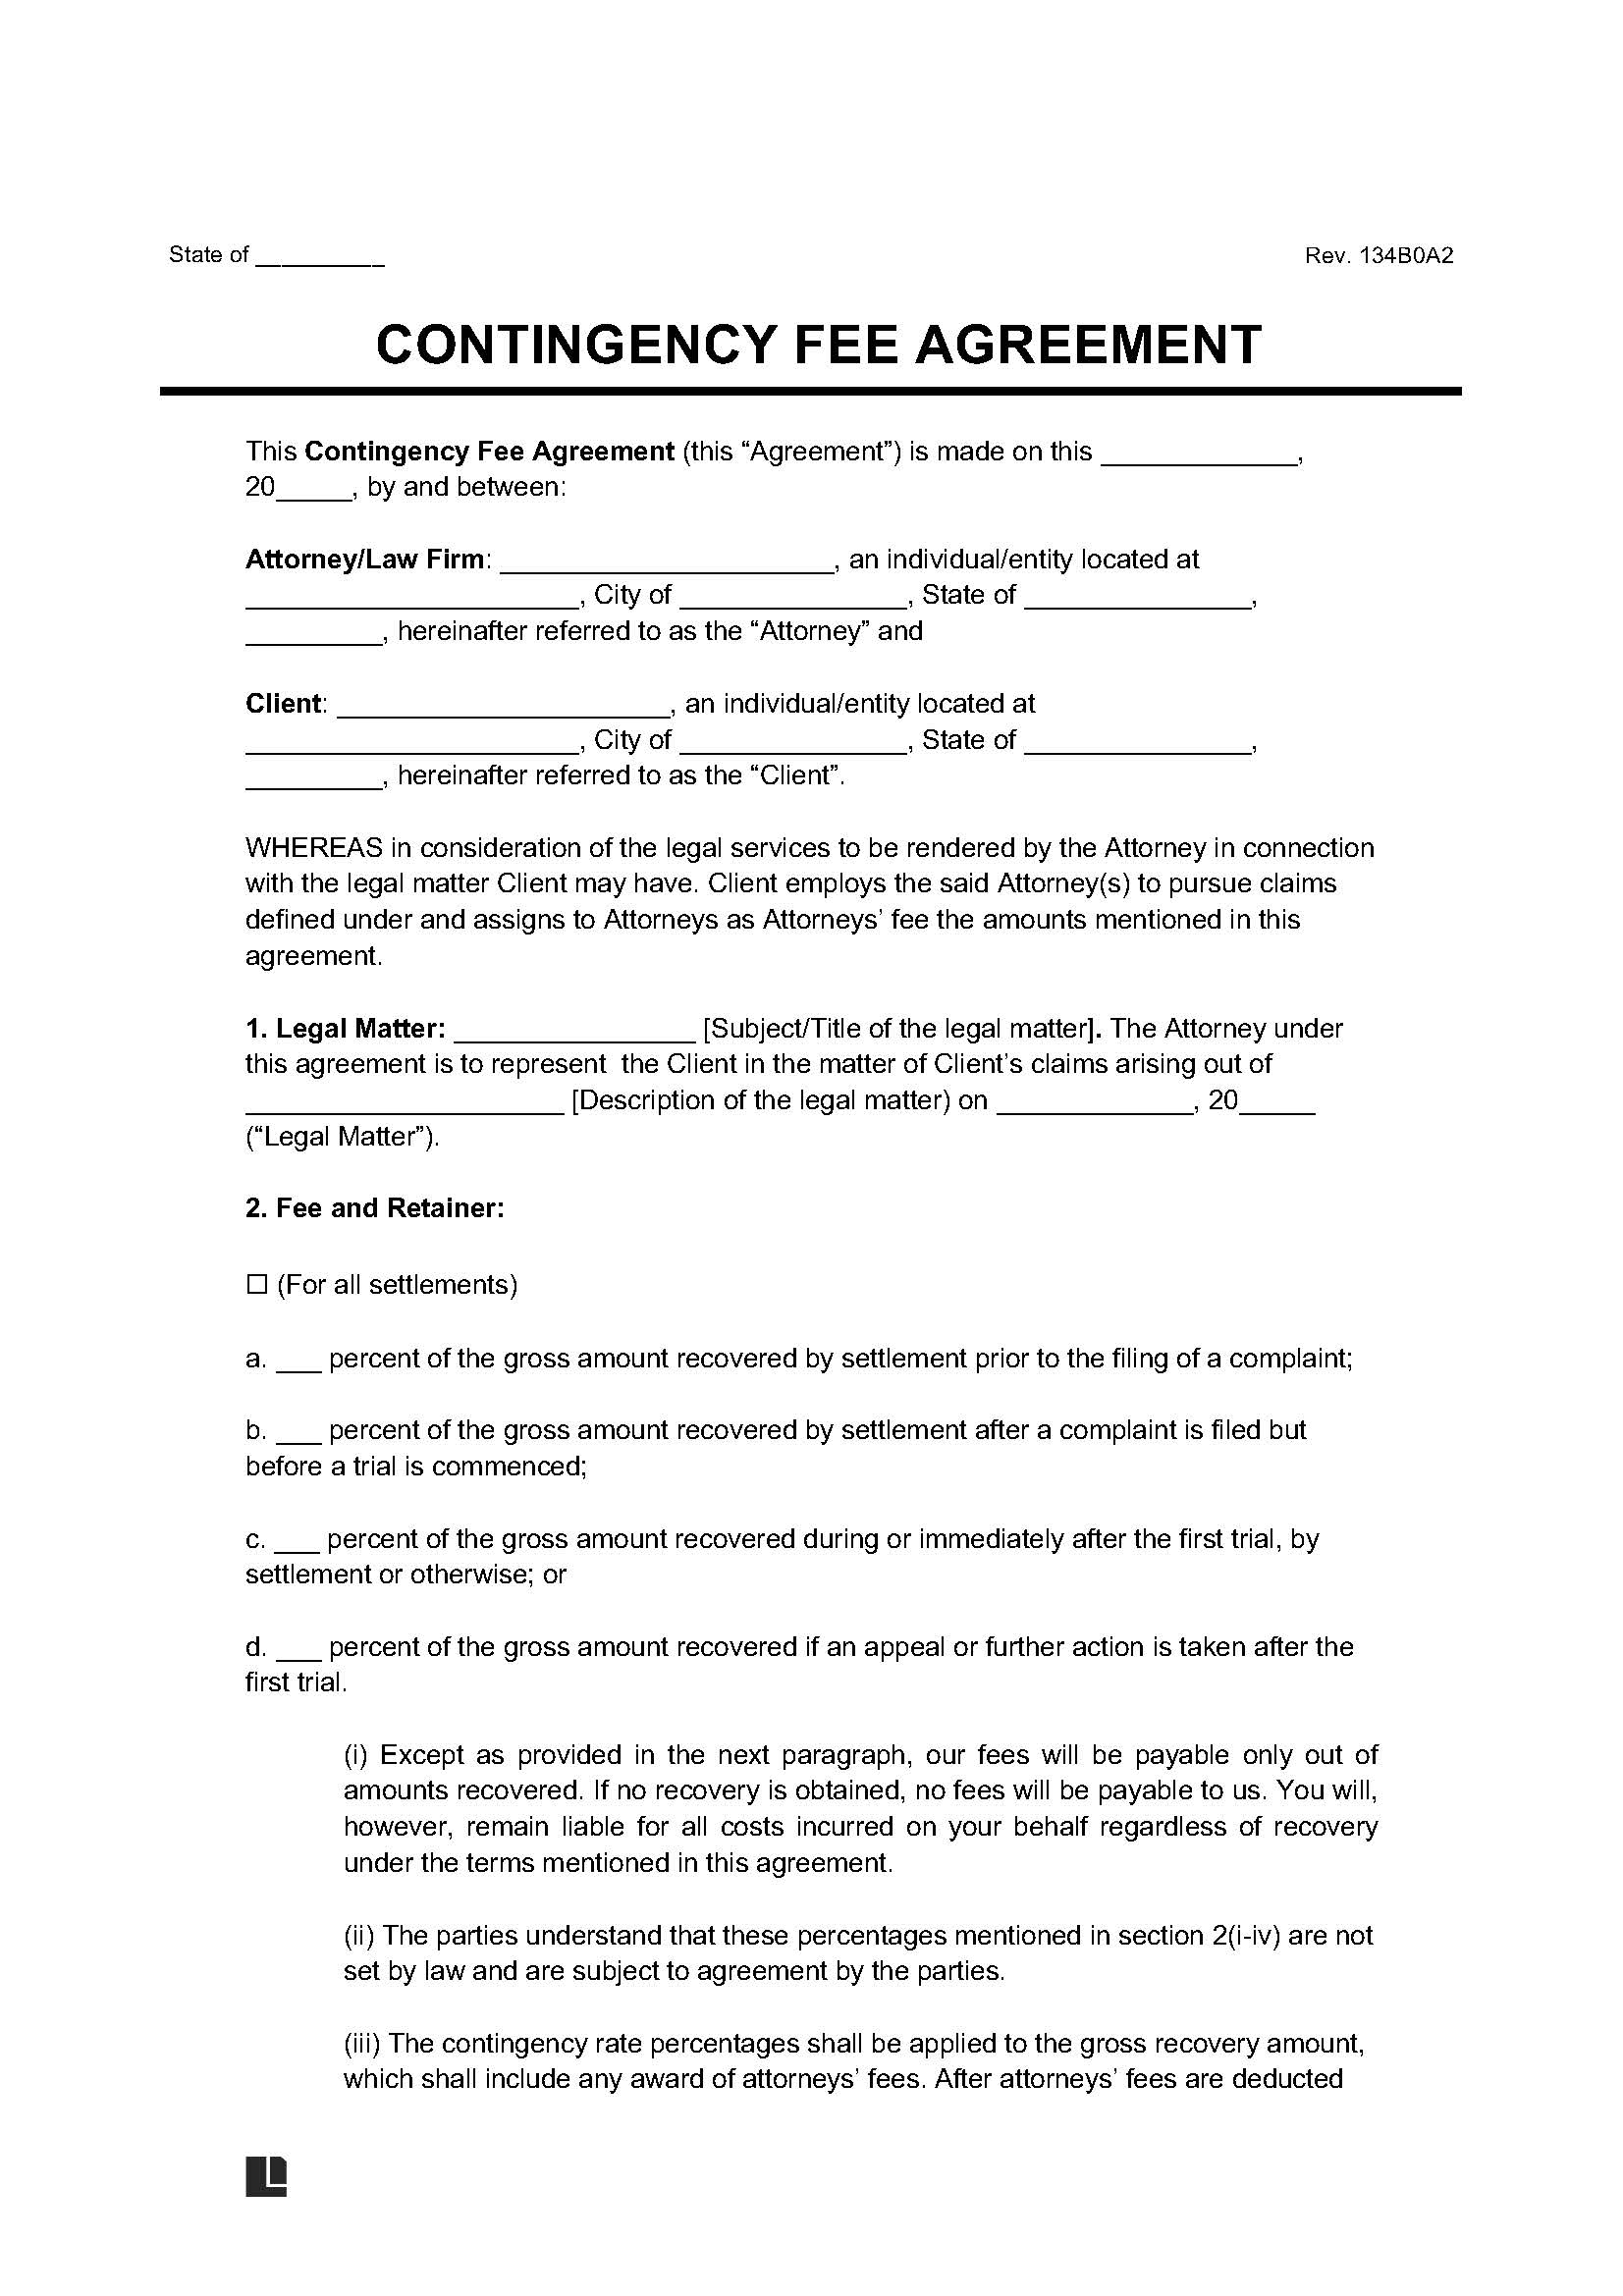 Contingency Fee Agreement screenshot